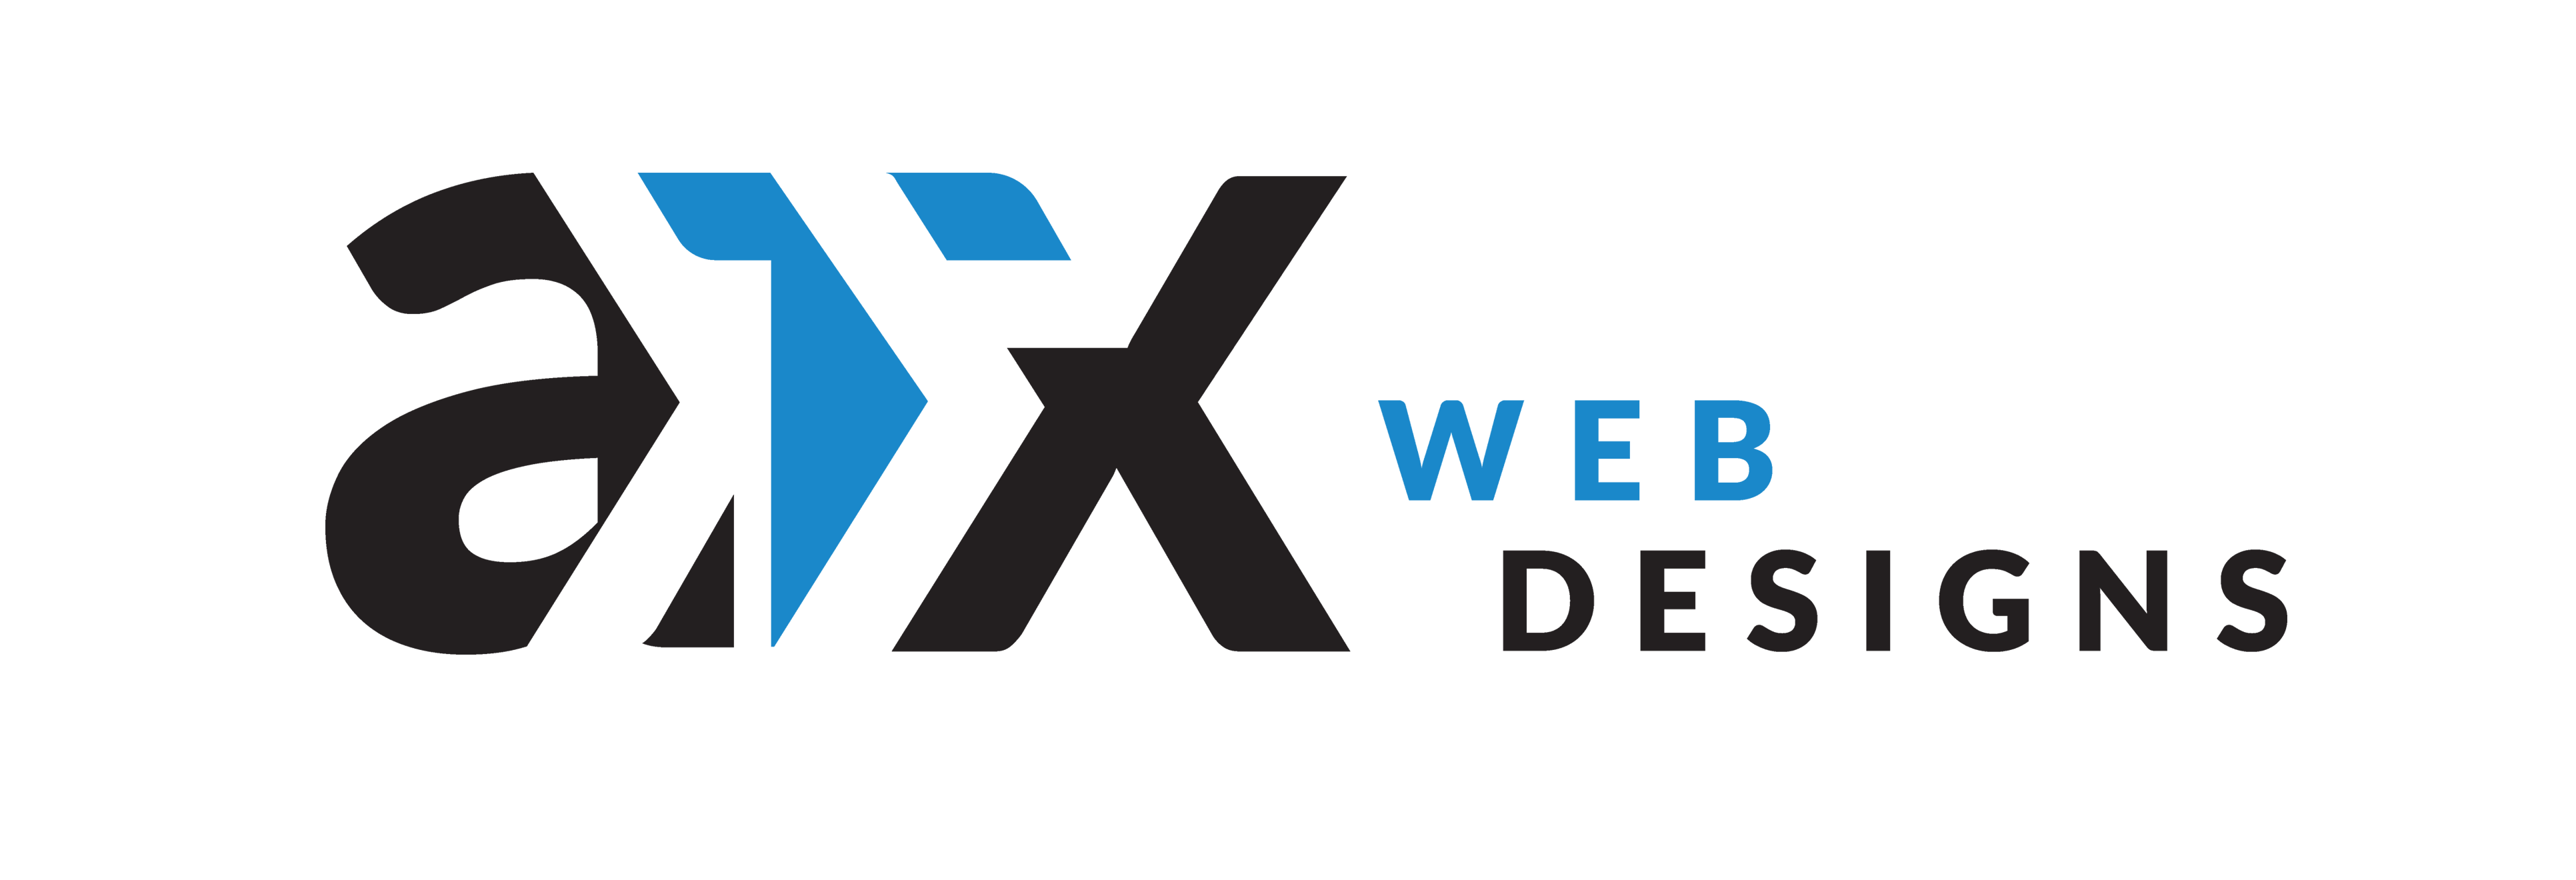 Best Web Design Firm Logo: ATX Web Designs